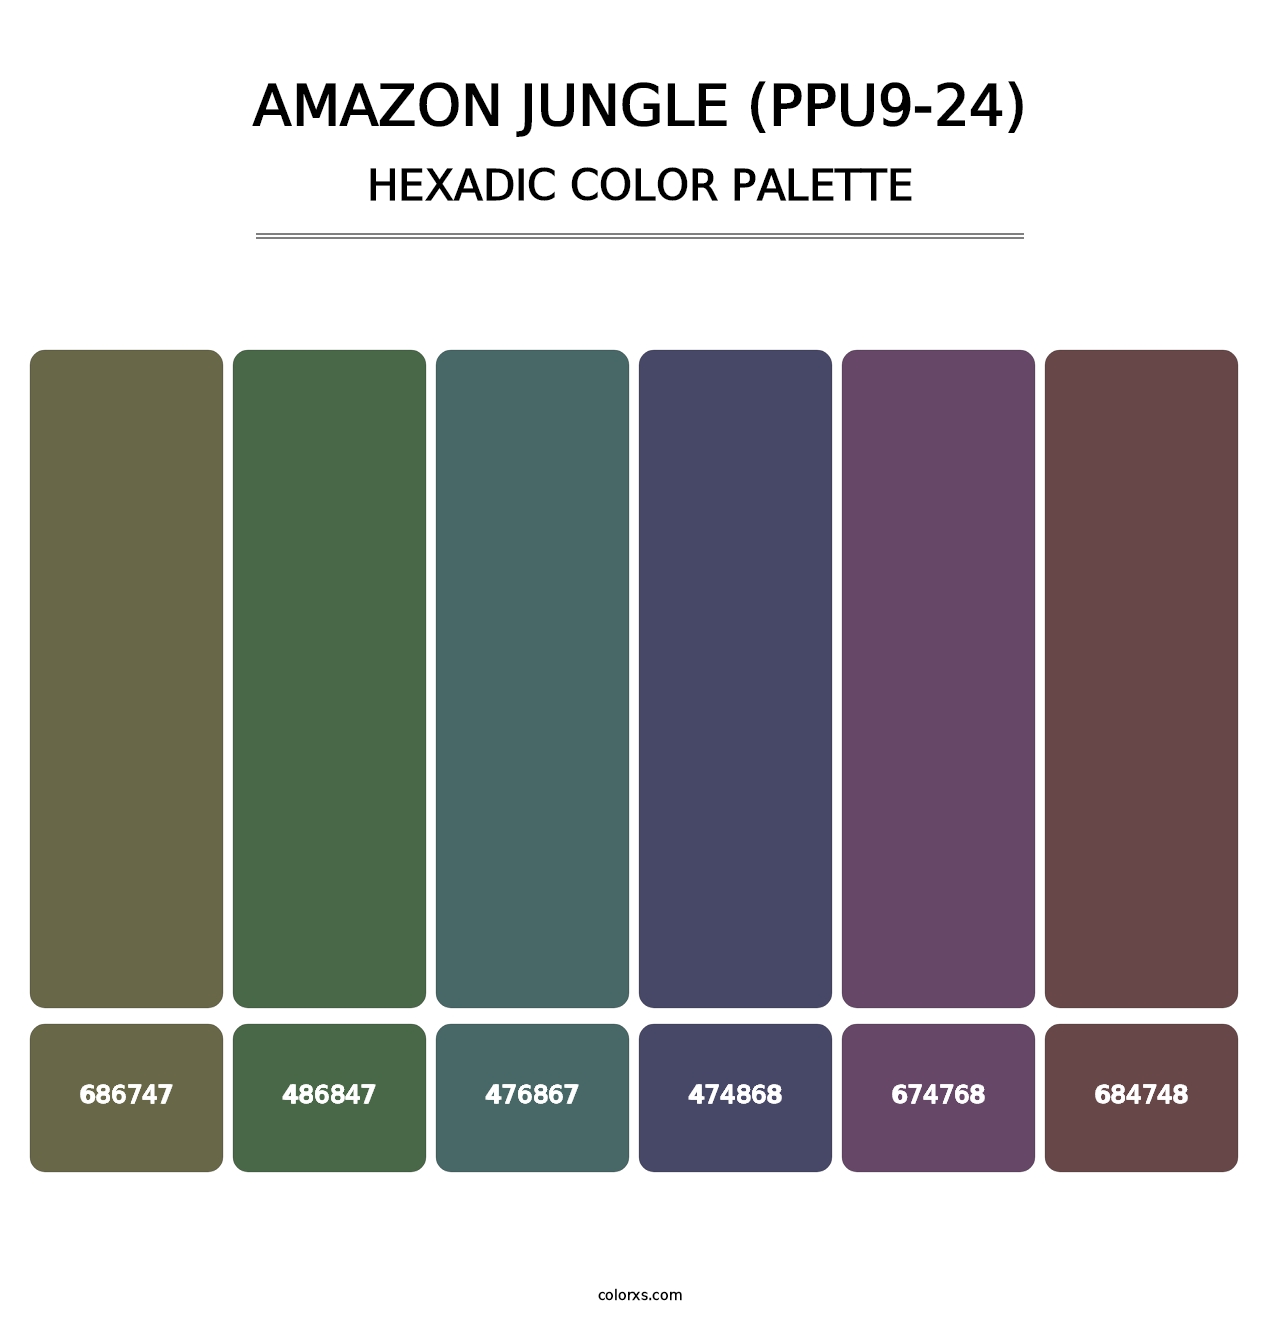 Amazon Jungle (PPU9-24) - Hexadic Color Palette